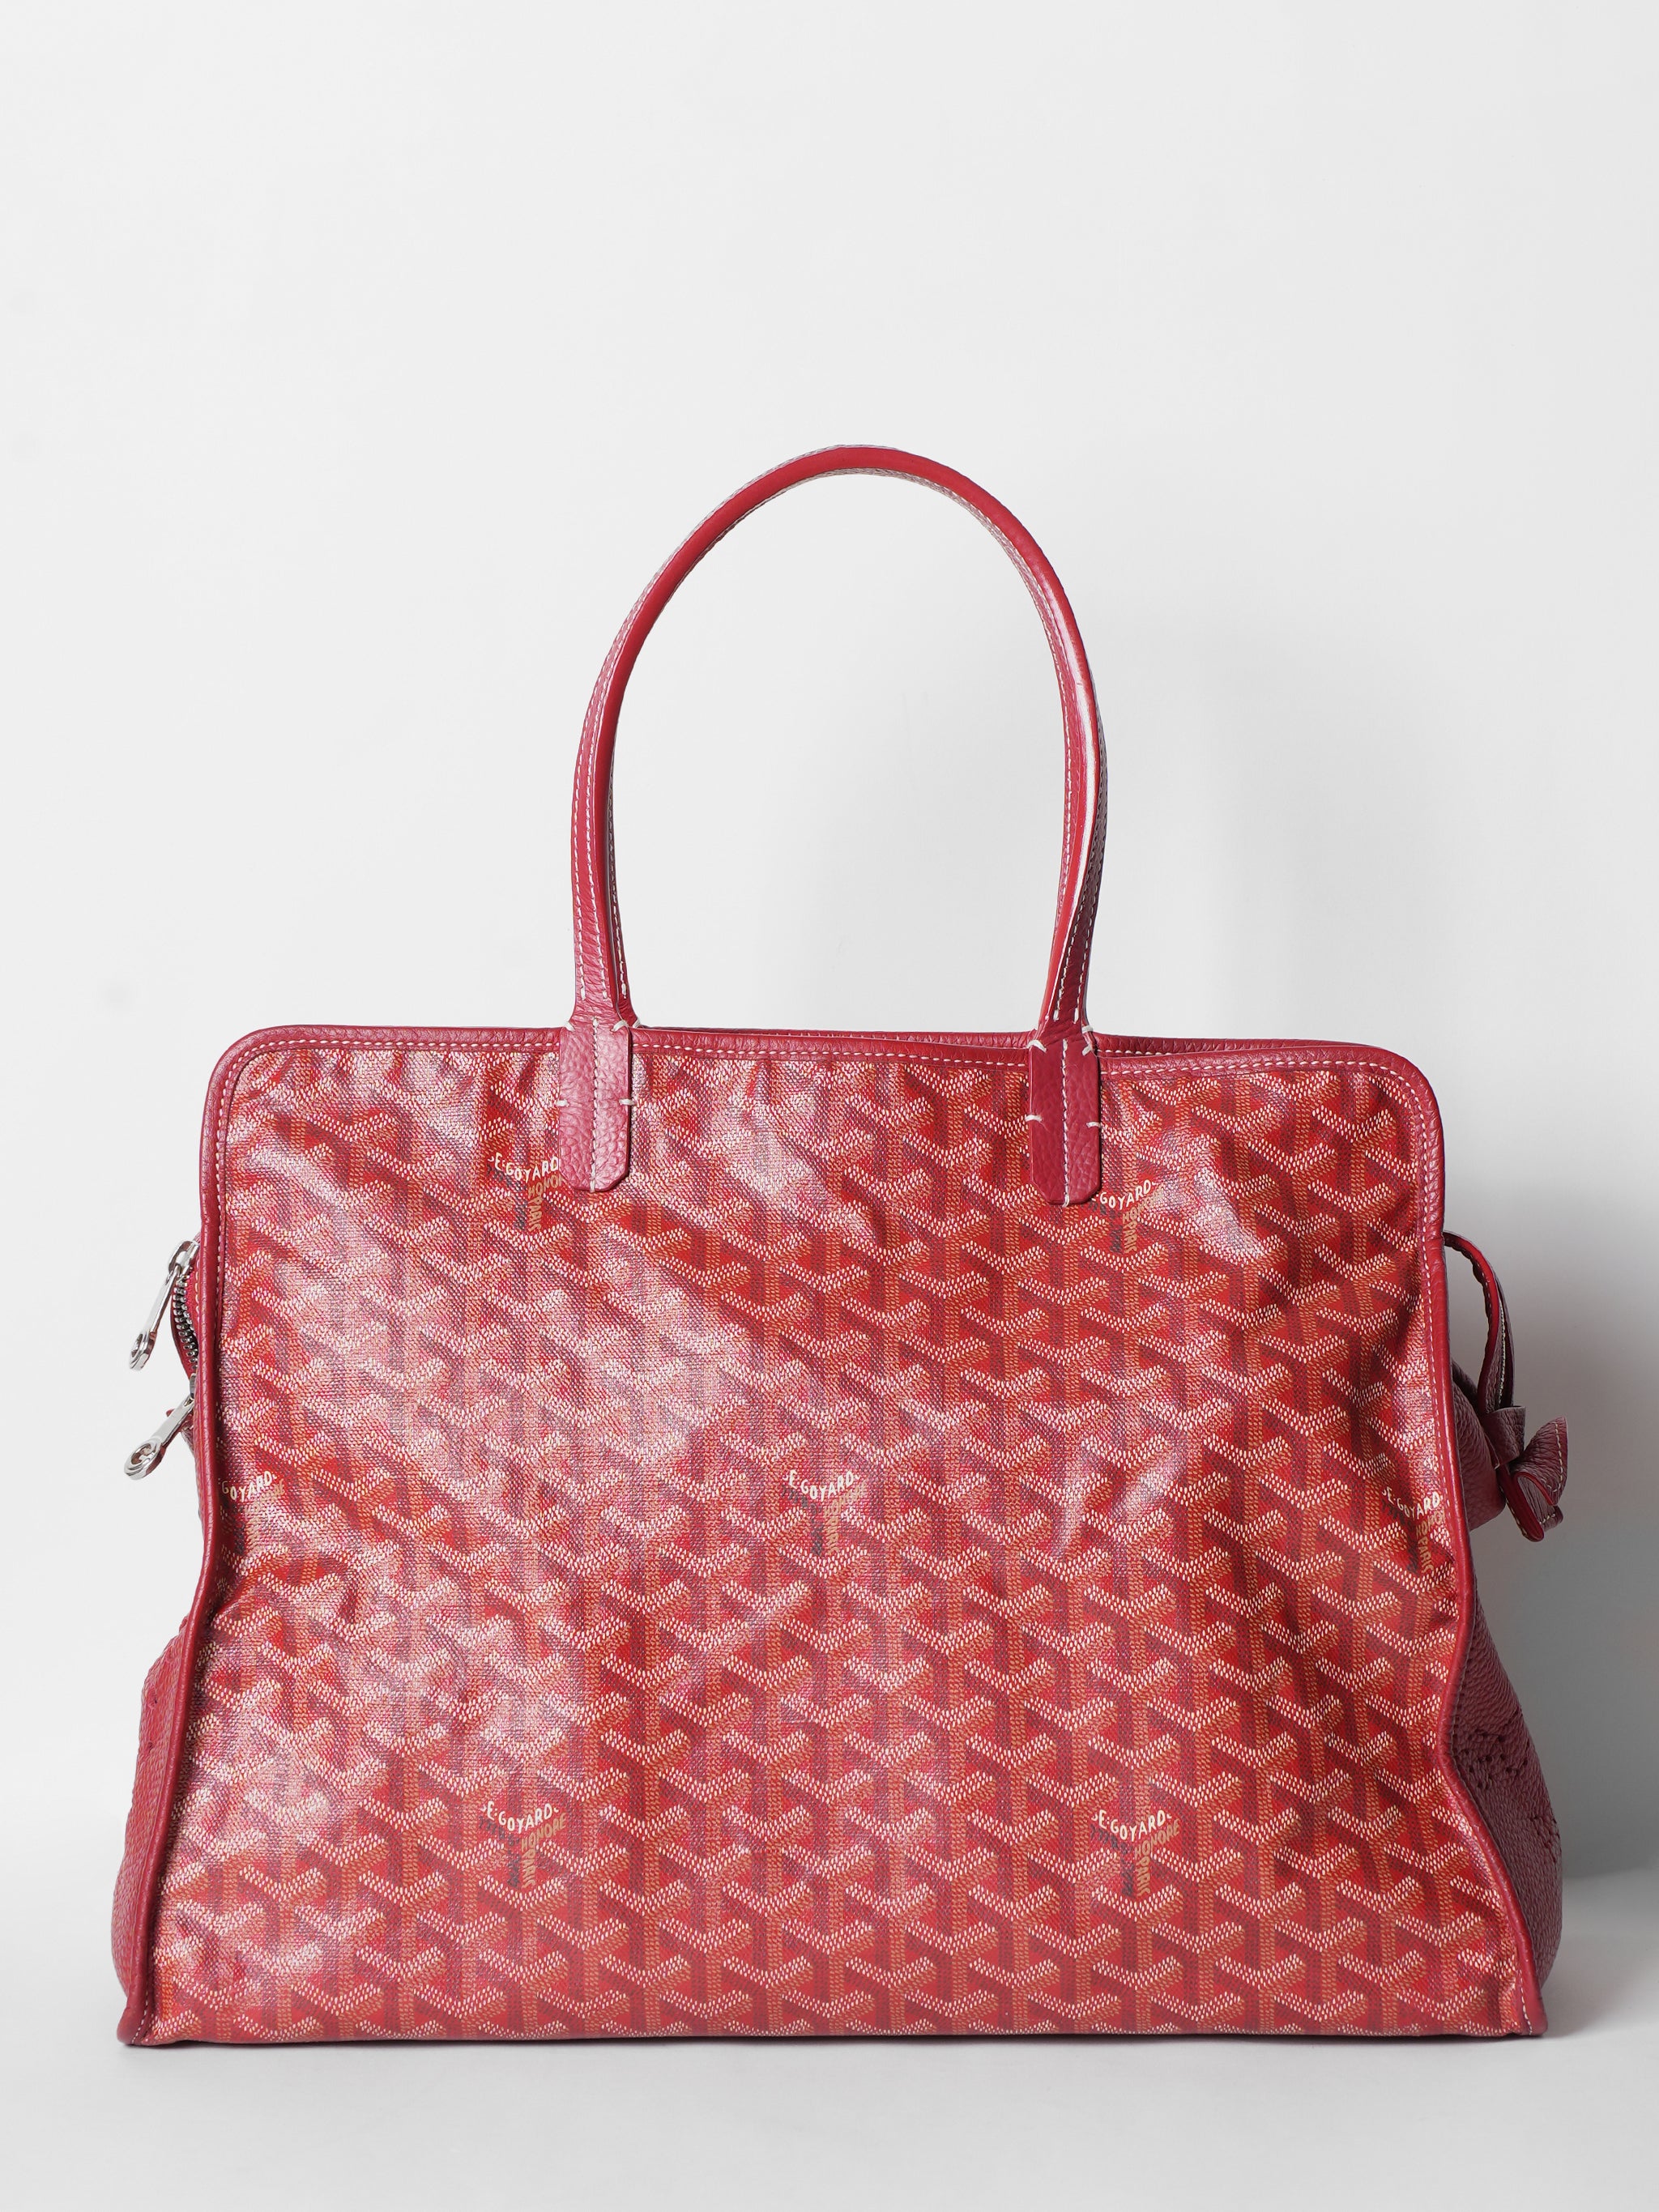 Goyard Hardy Tote Bags for Women